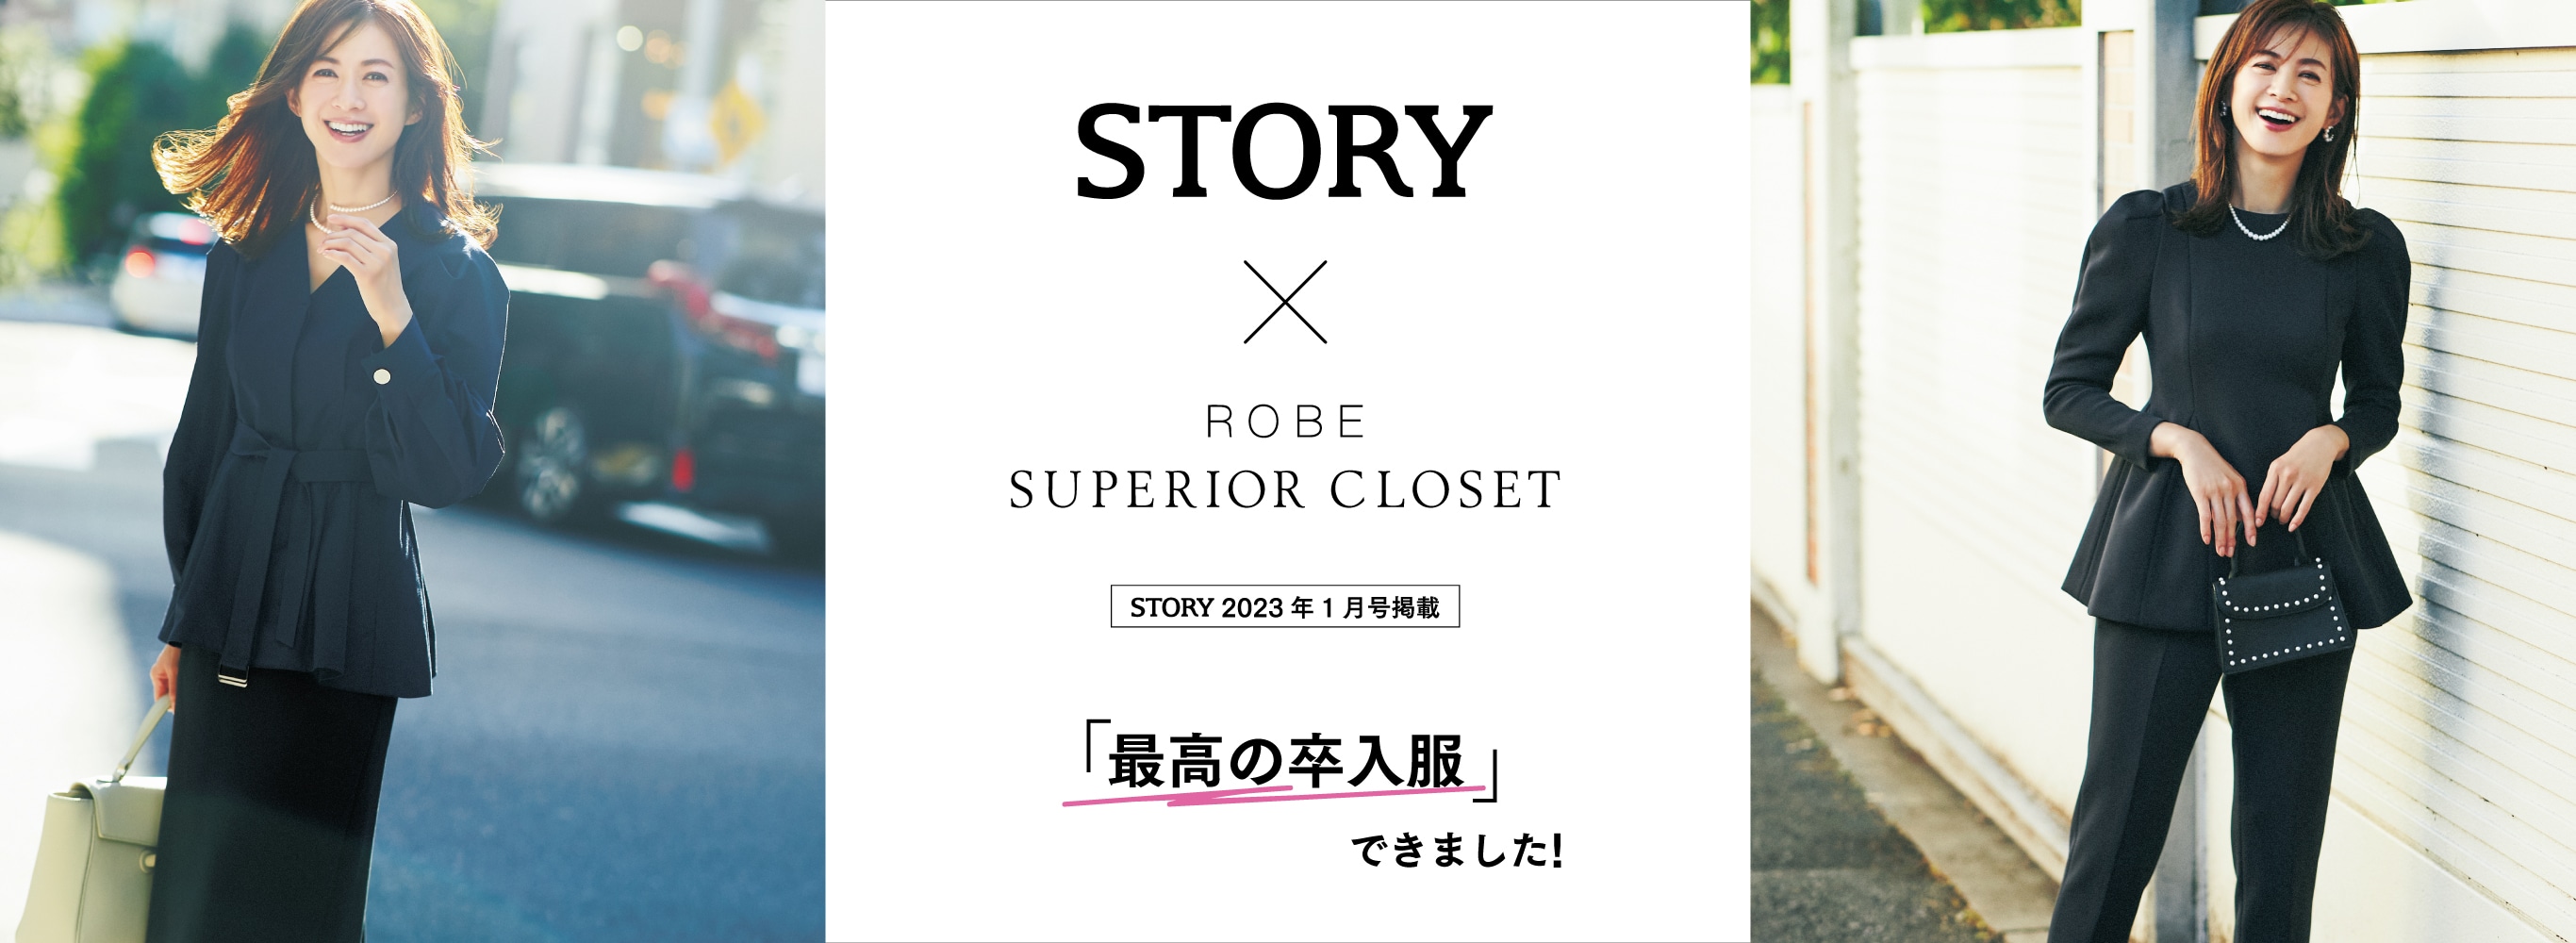 ROBE SUPERIOR CLOSET / STORY×ROBE SUPERIOR CLOSET 「最高の卒入服 